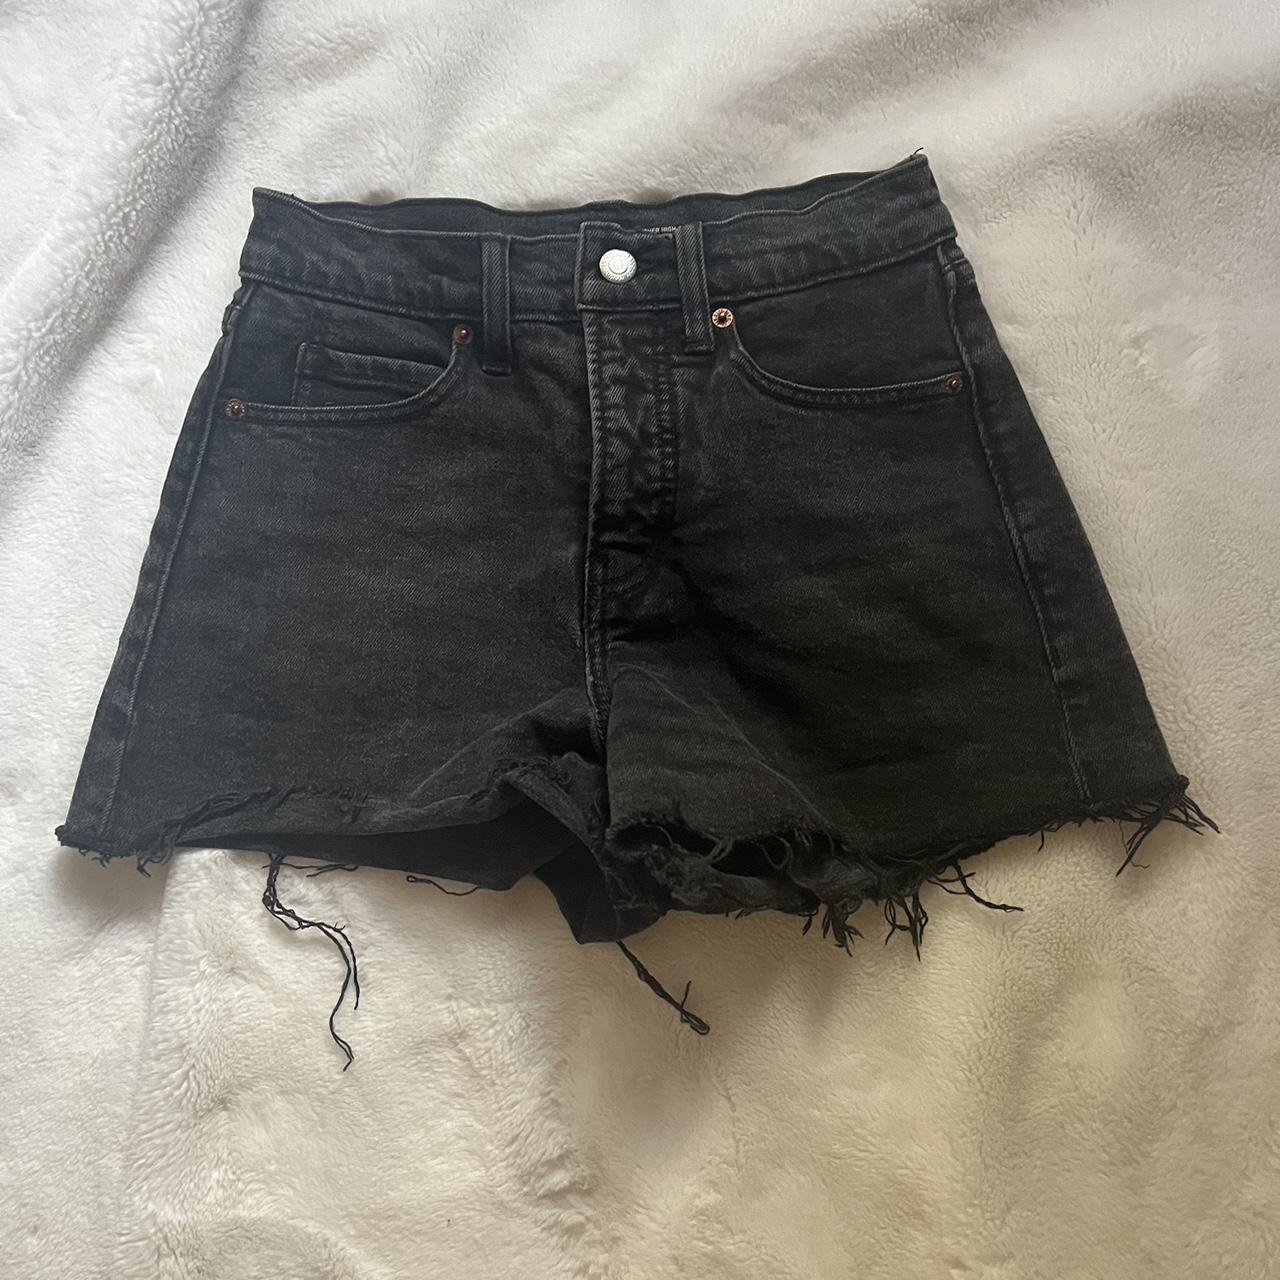 Black High rise jean shorts - Depop